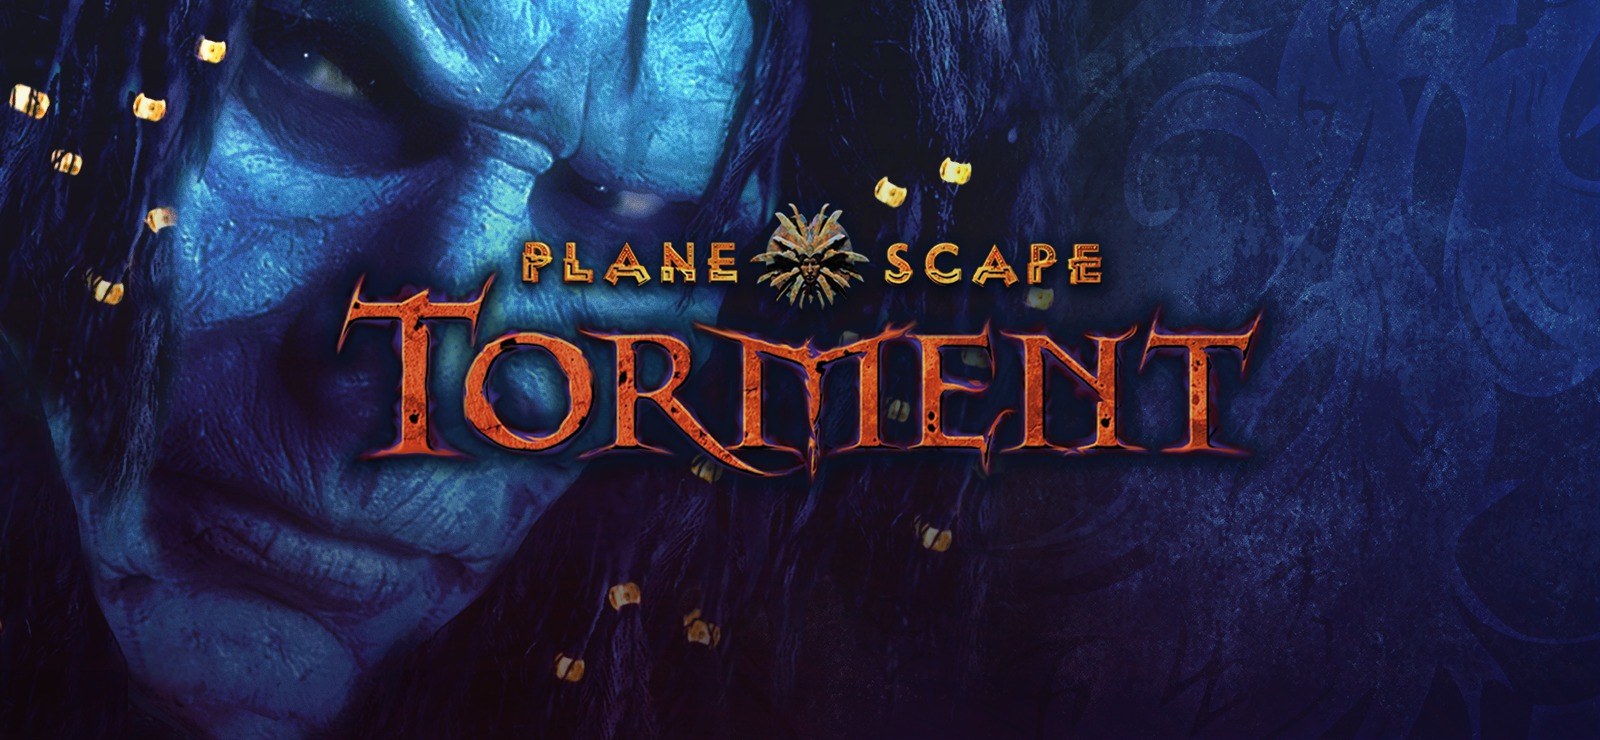 Planescape: Torment وهي من أفضل ألعاب الكمبيوتر